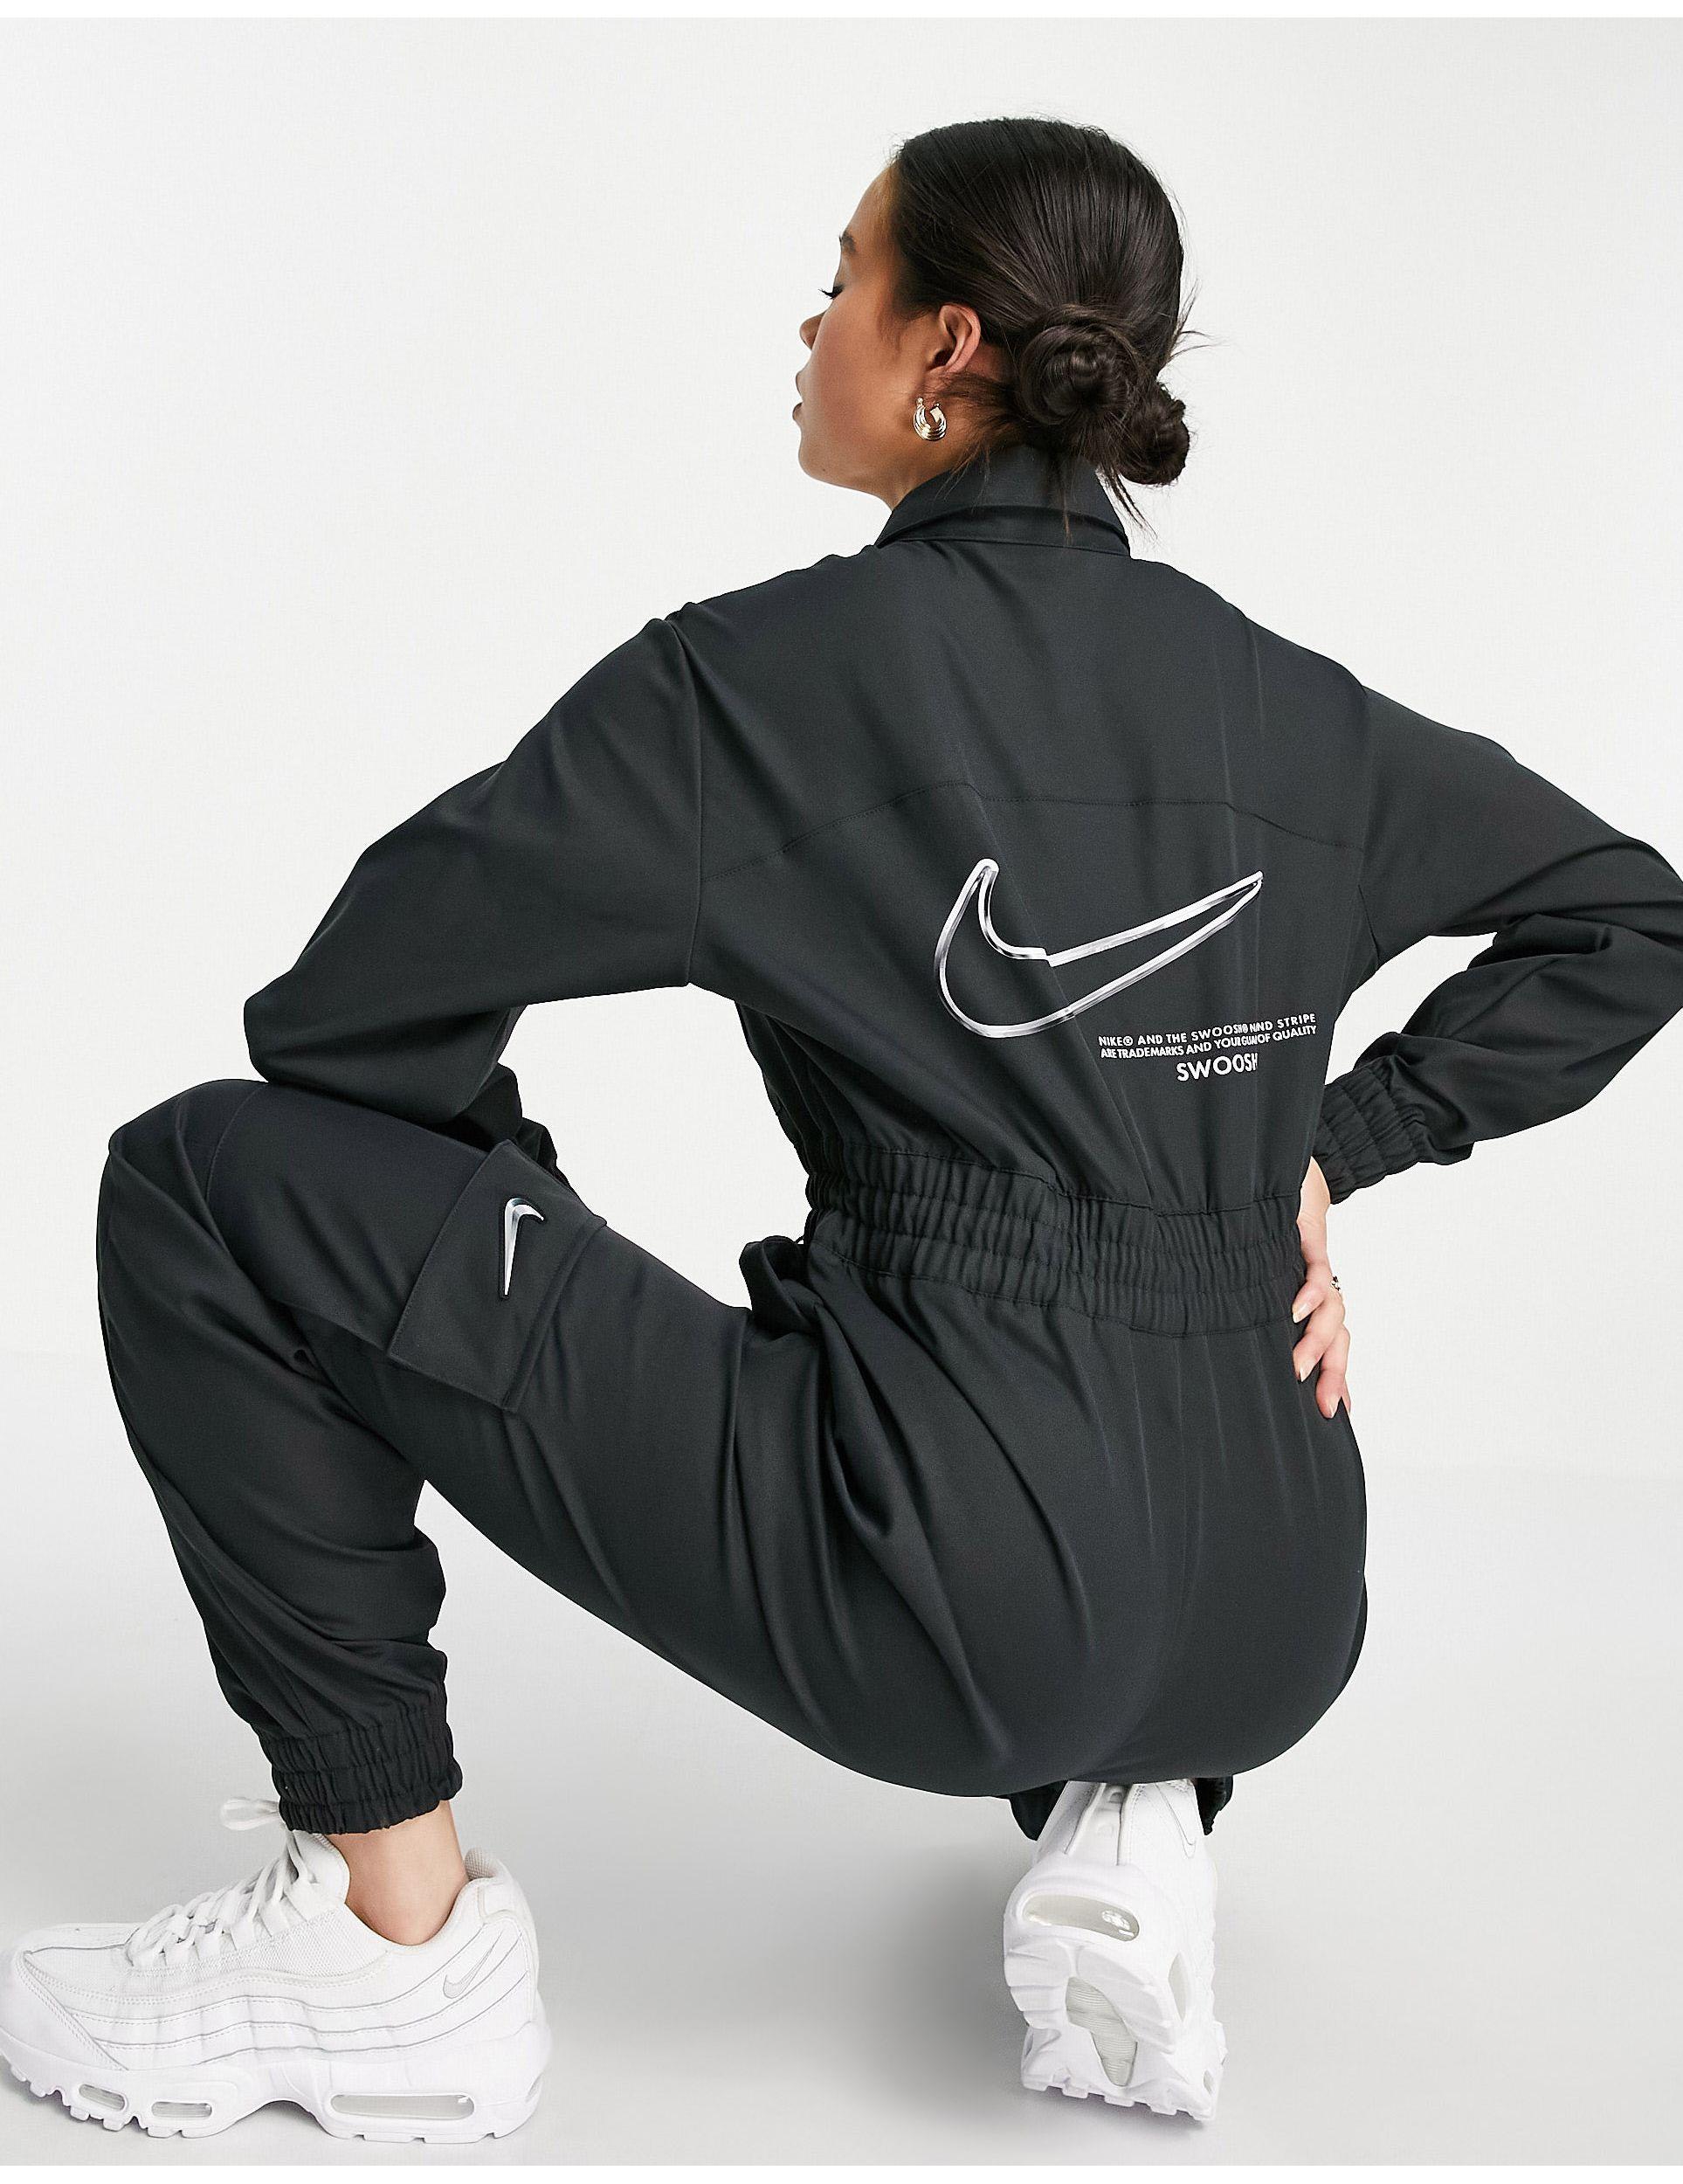 Nike Swoosh Utility Jumpsuit in Black